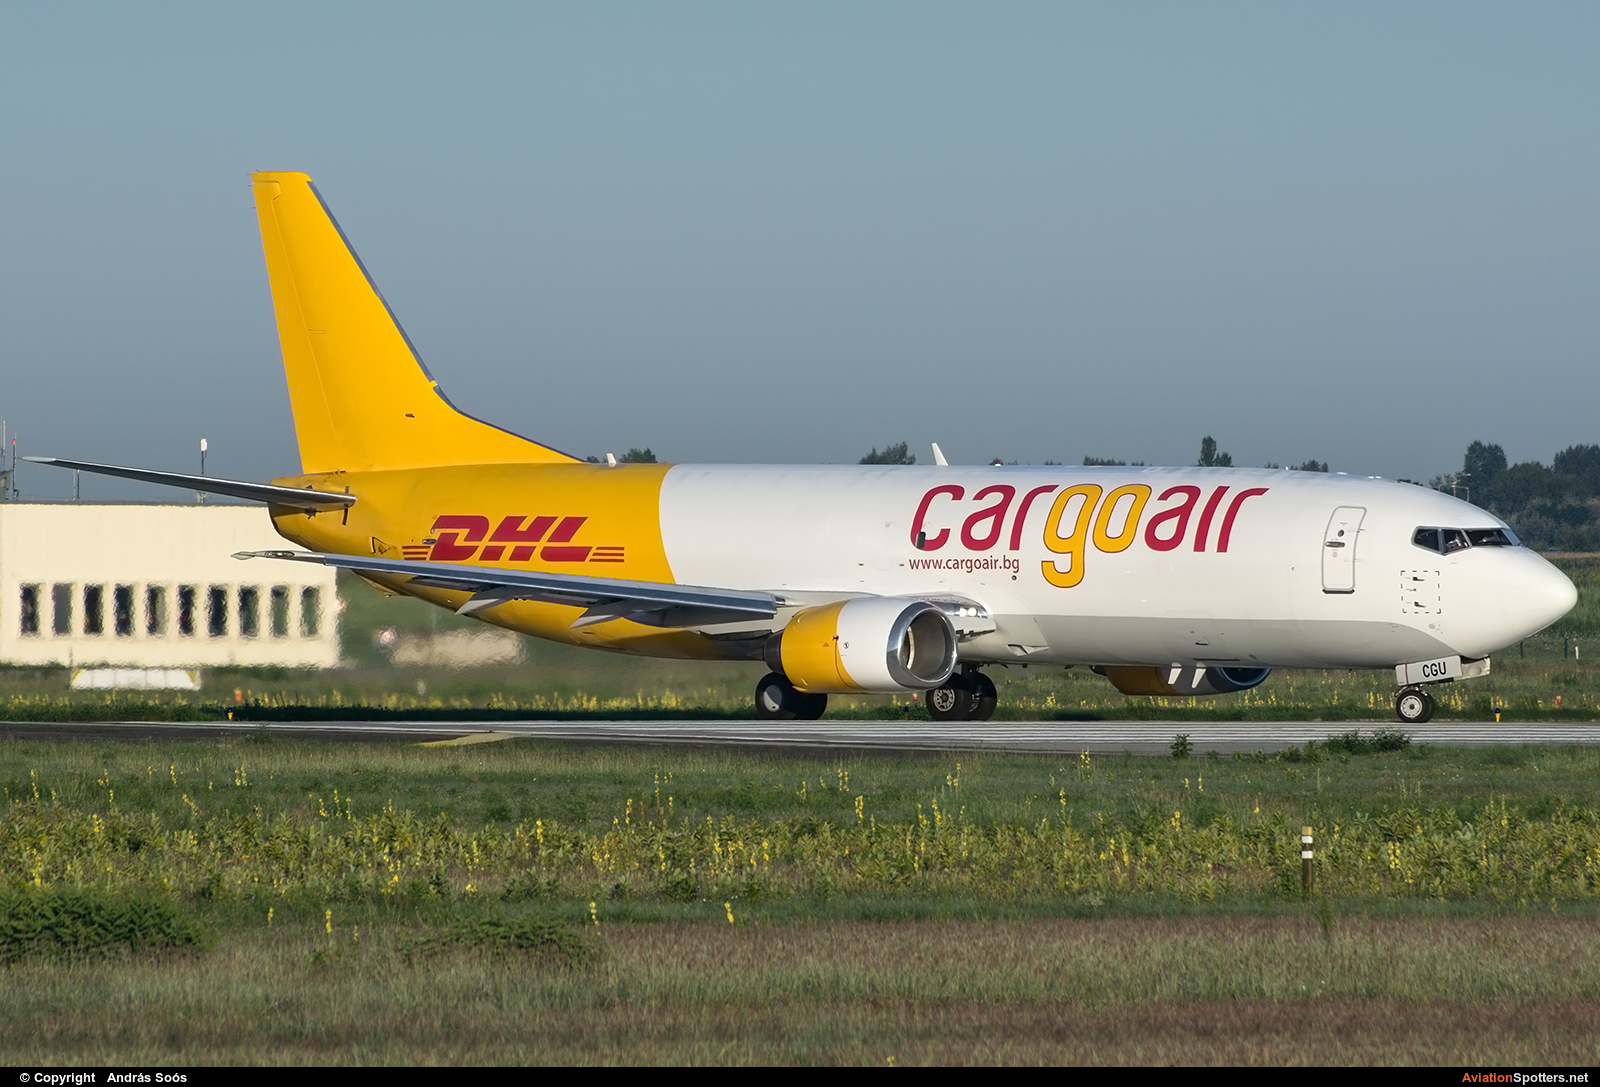 Cargo Air  -  737-400F  (LZ-CGU) By András Soós (sas1965)